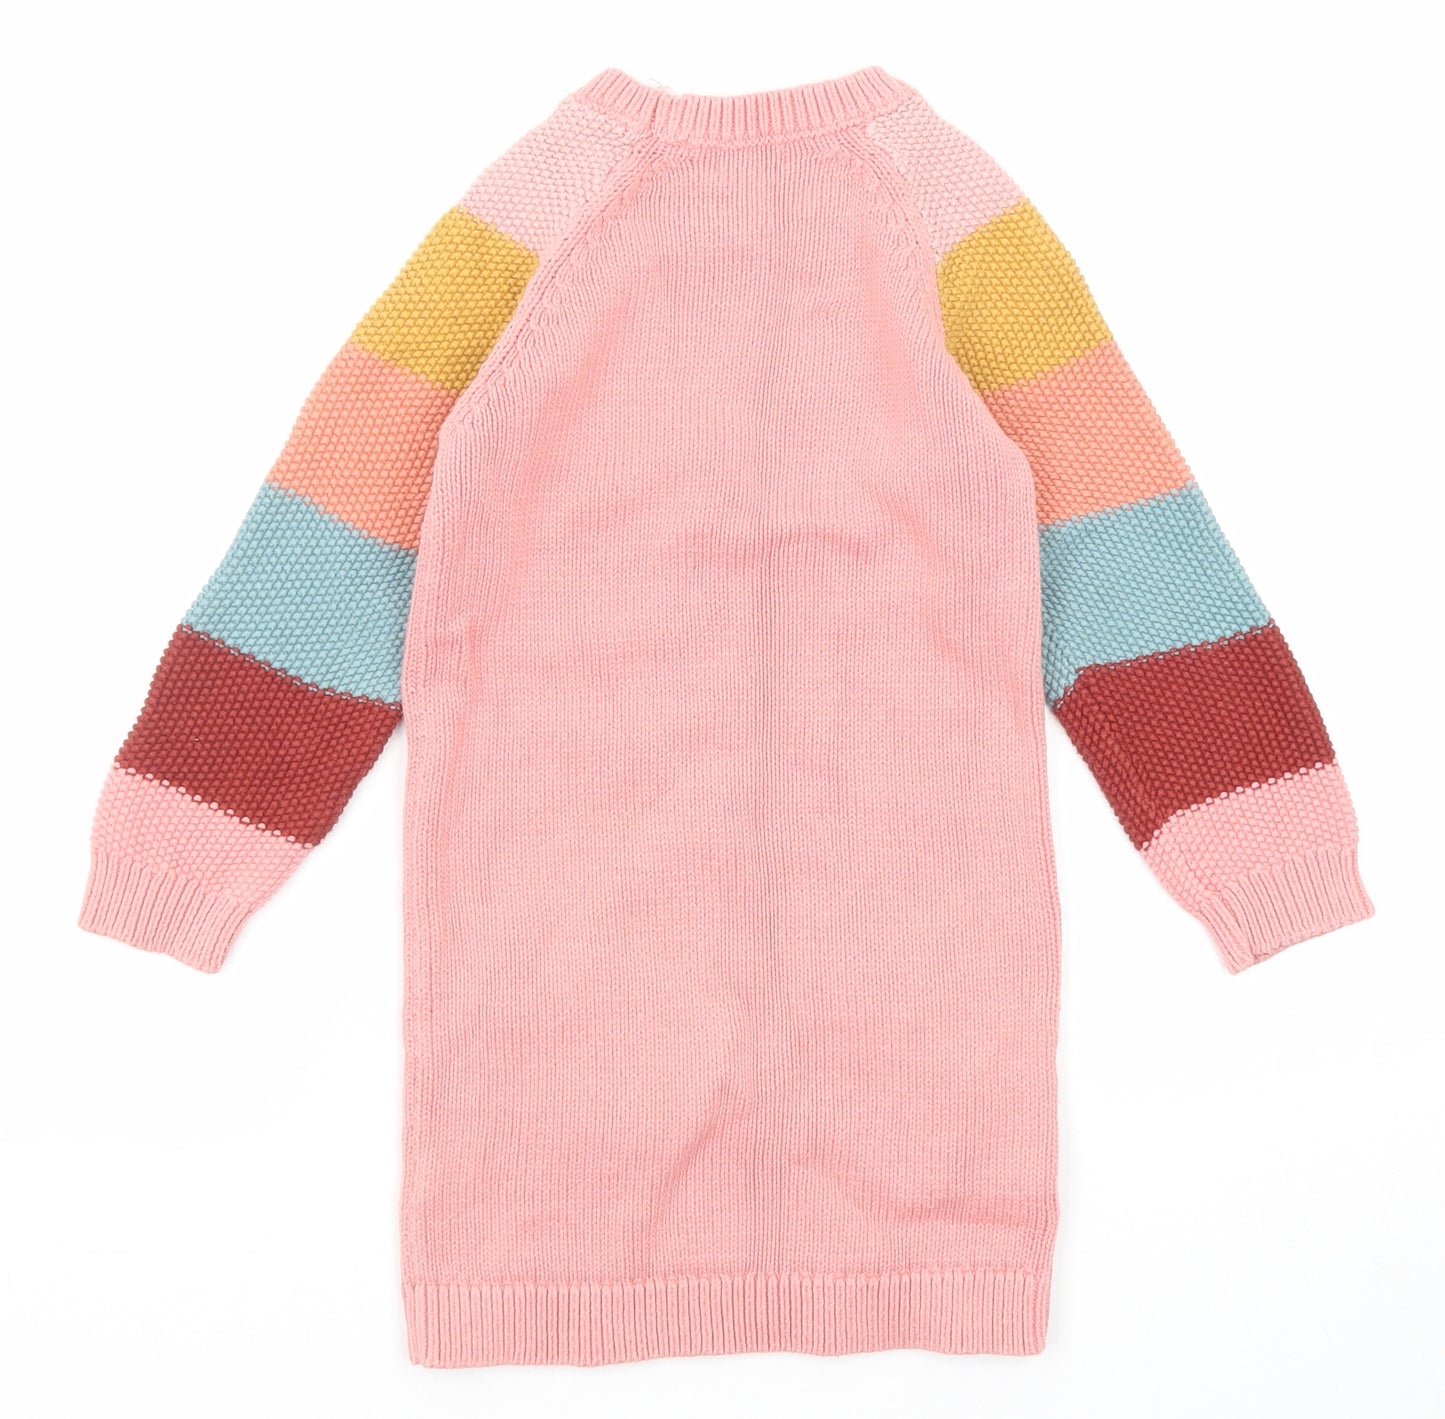 NEXT Girls Pink Round Neck Striped Cotton Pullover Jumper Size 3-4 Years Pullover - Rabbit Pattern